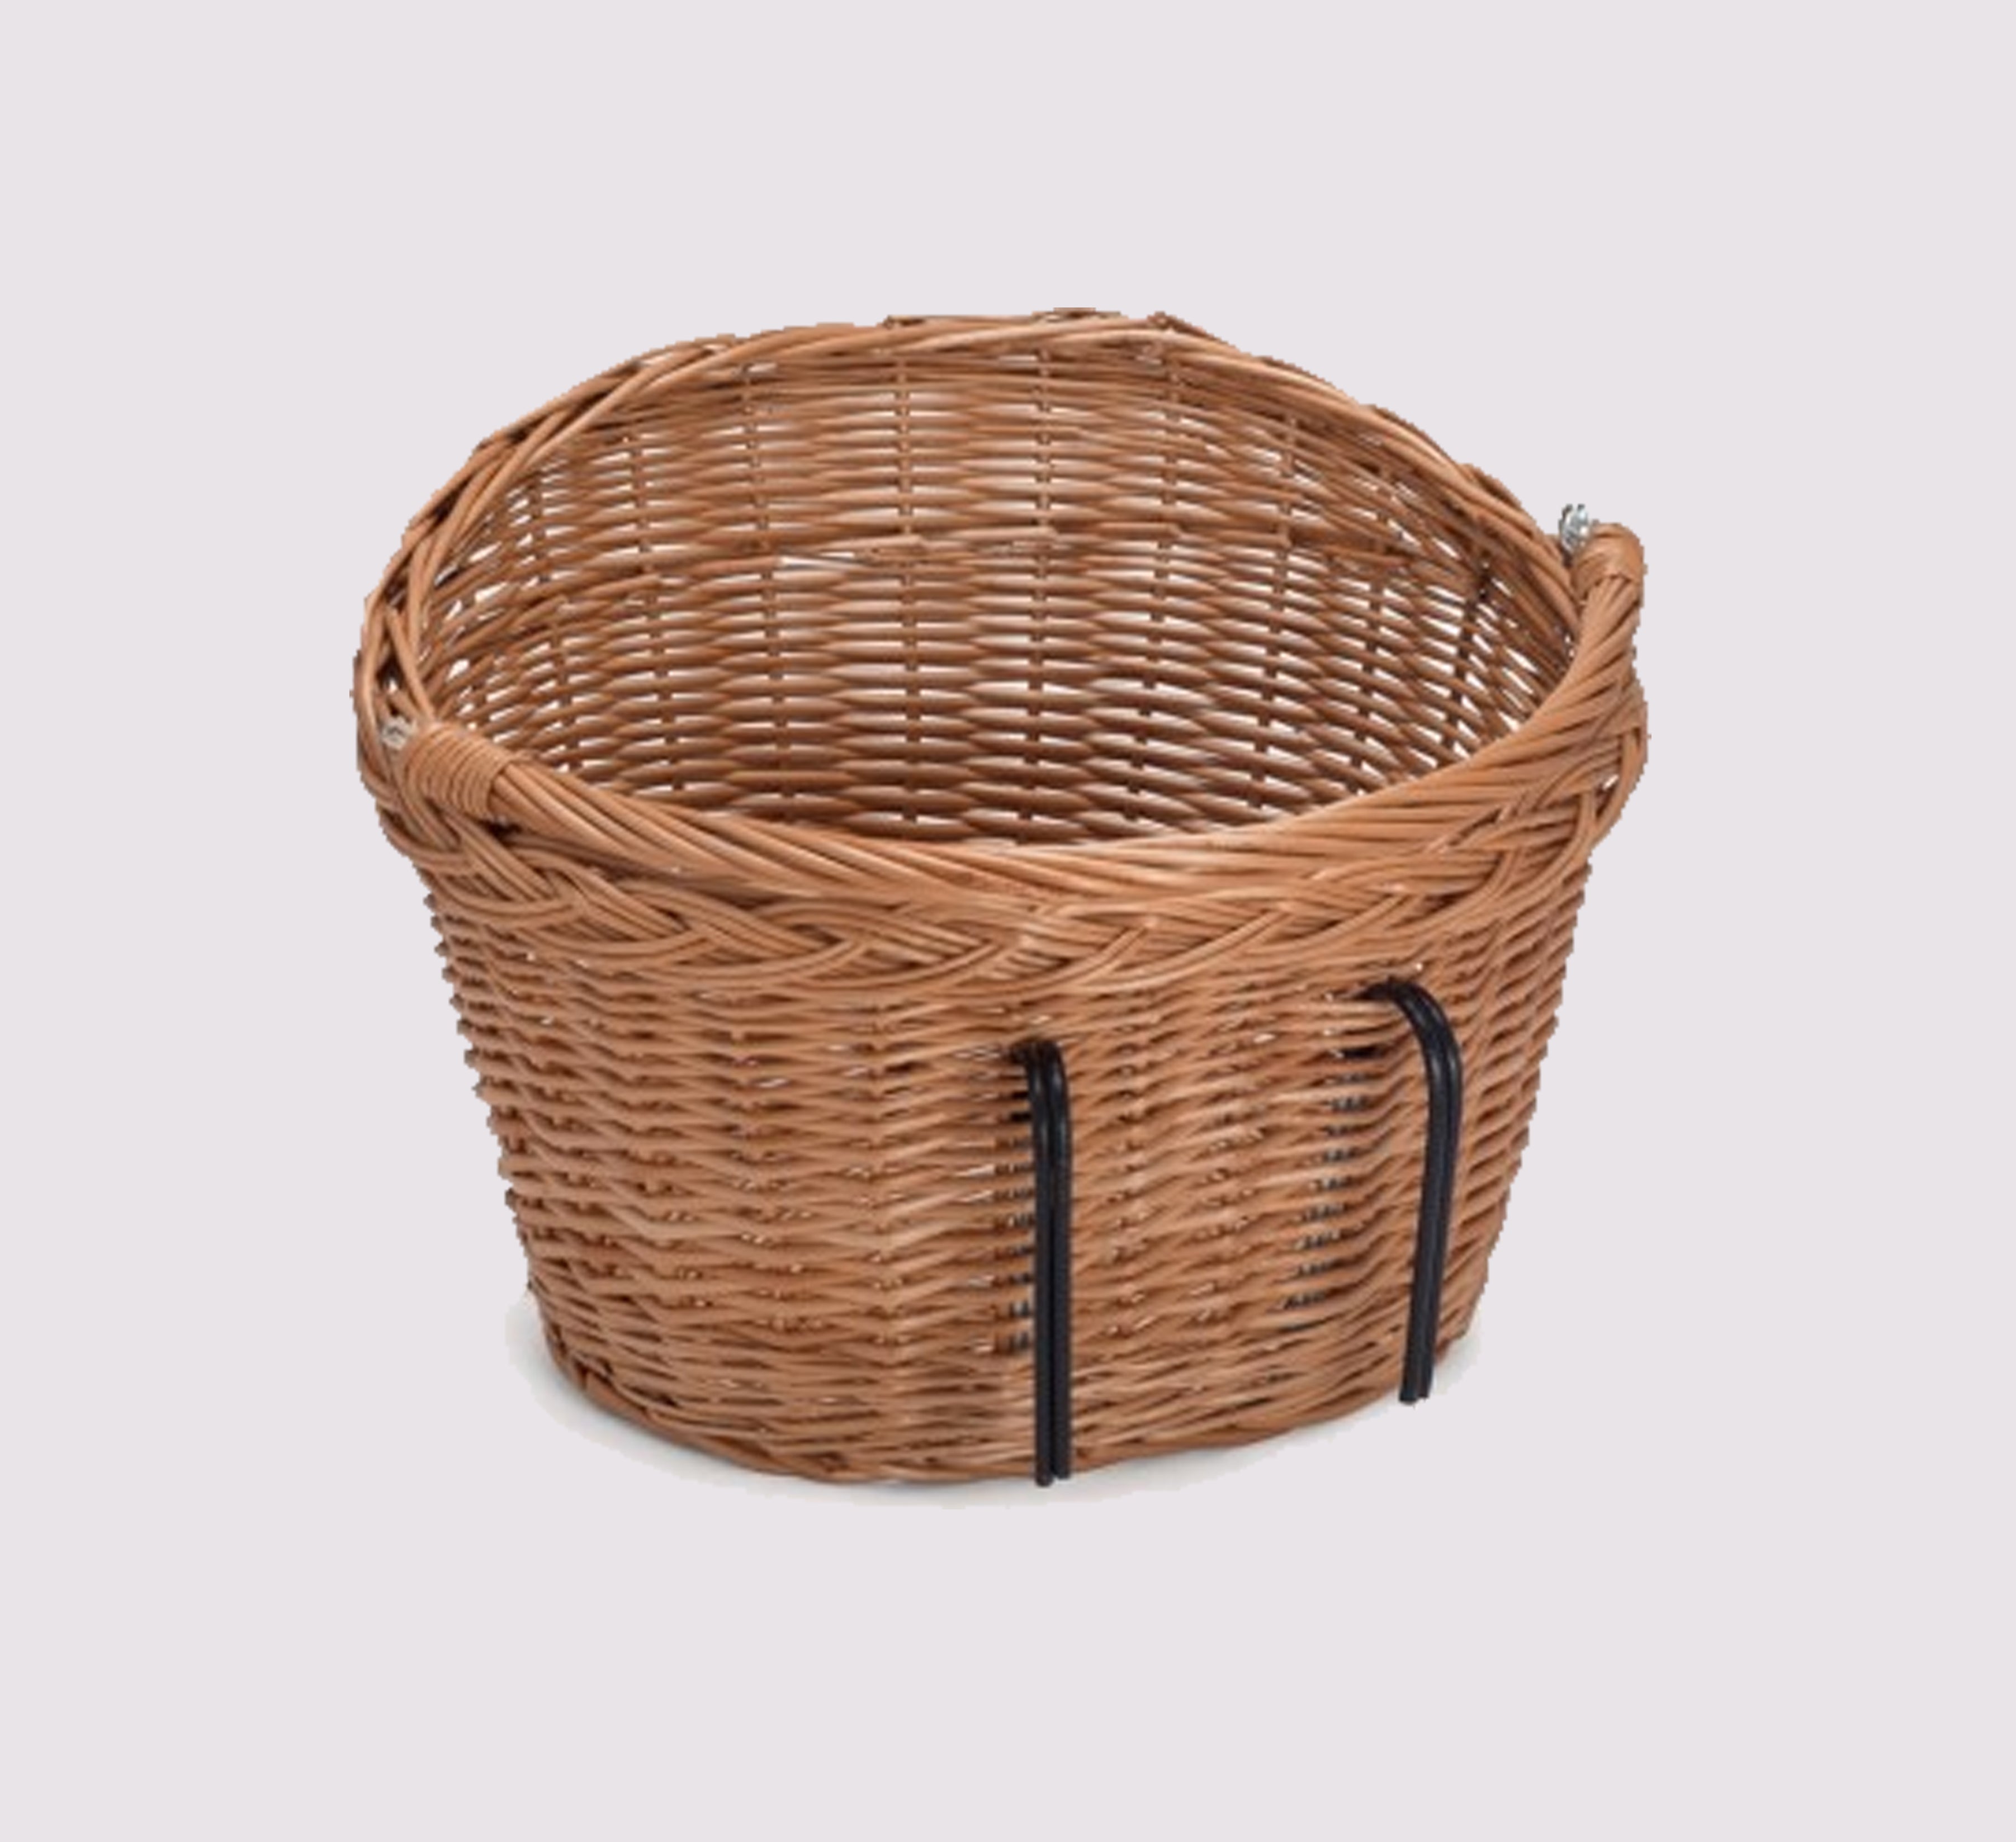 The pilgrim wicker bike basket 